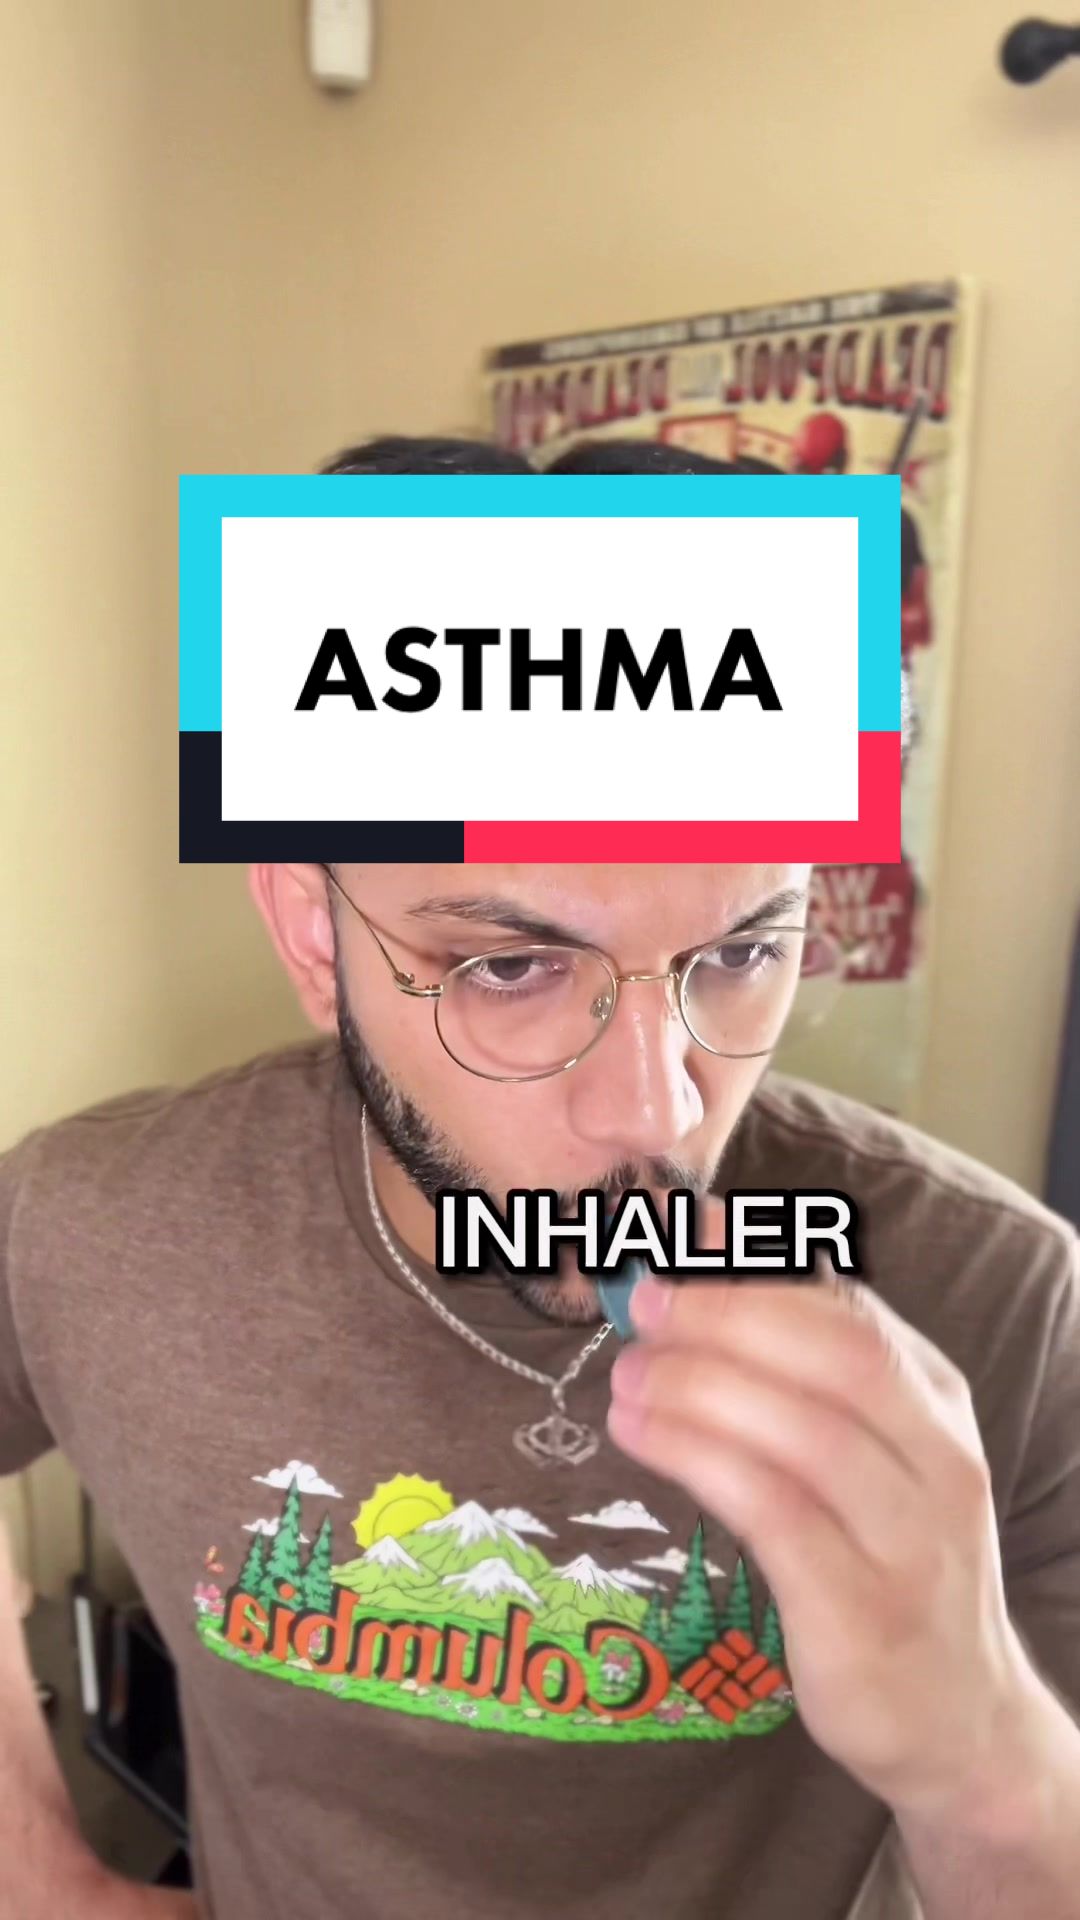 What happens when you have asthma #CapCut #asthma #inhaler #AFairShotWithBlock #cellsatwork #xharwant #learnontiktok